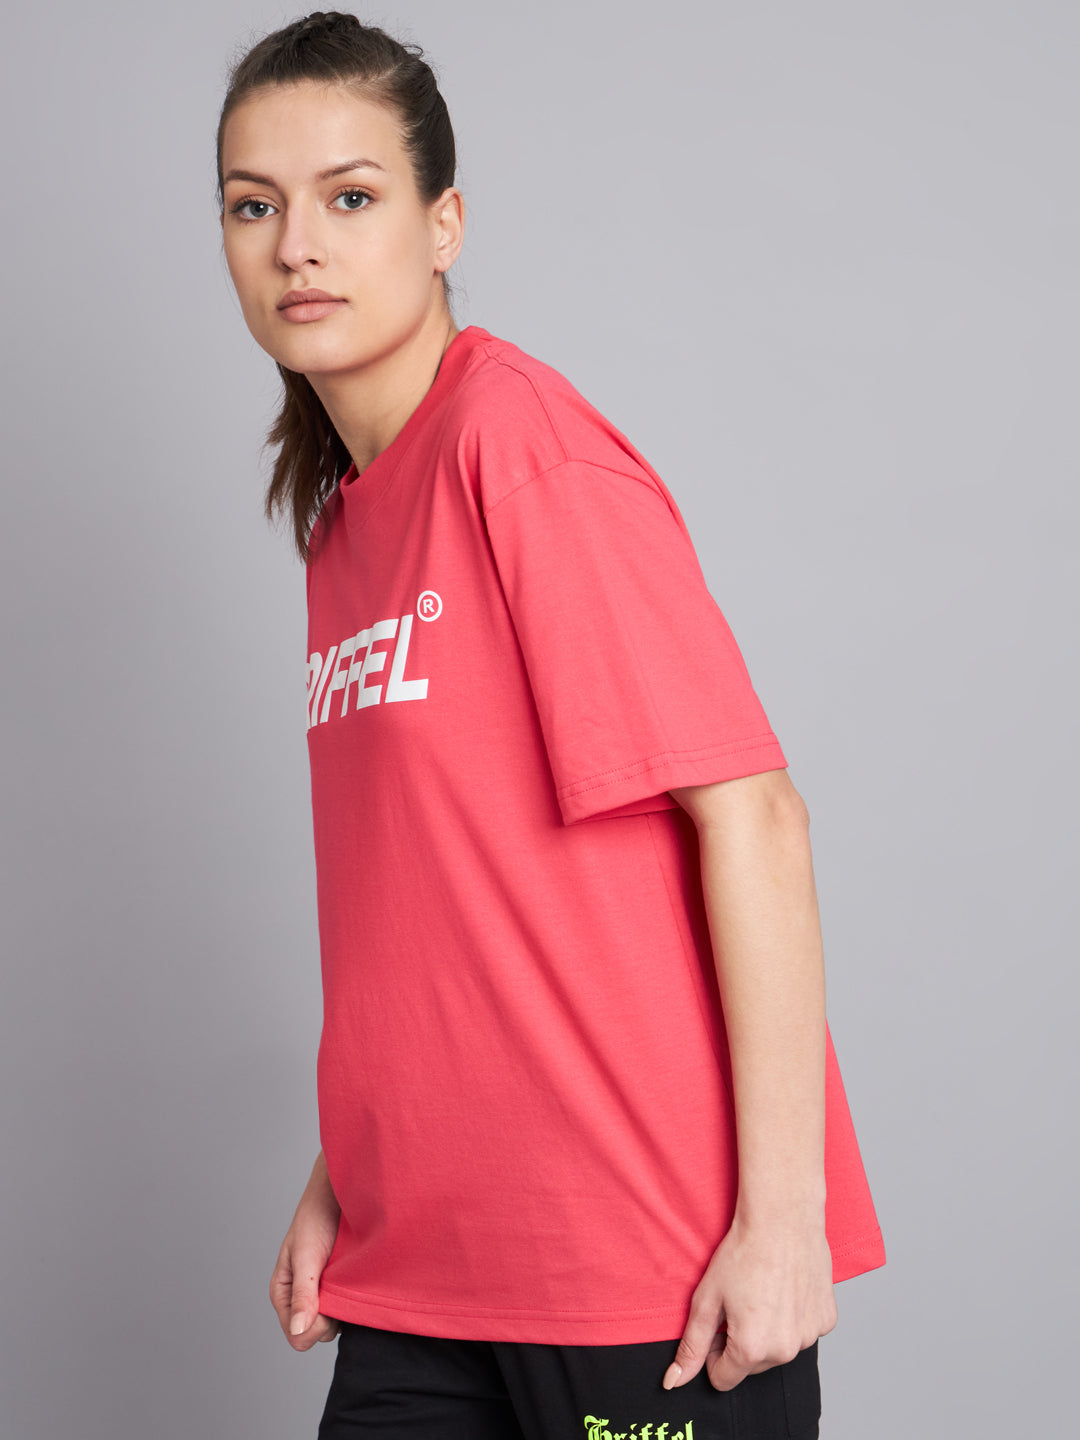 GRIFFEL Women SIGNATURE LOGO Oversized Drop Shoulder Neon Pink T-shirt - griffel